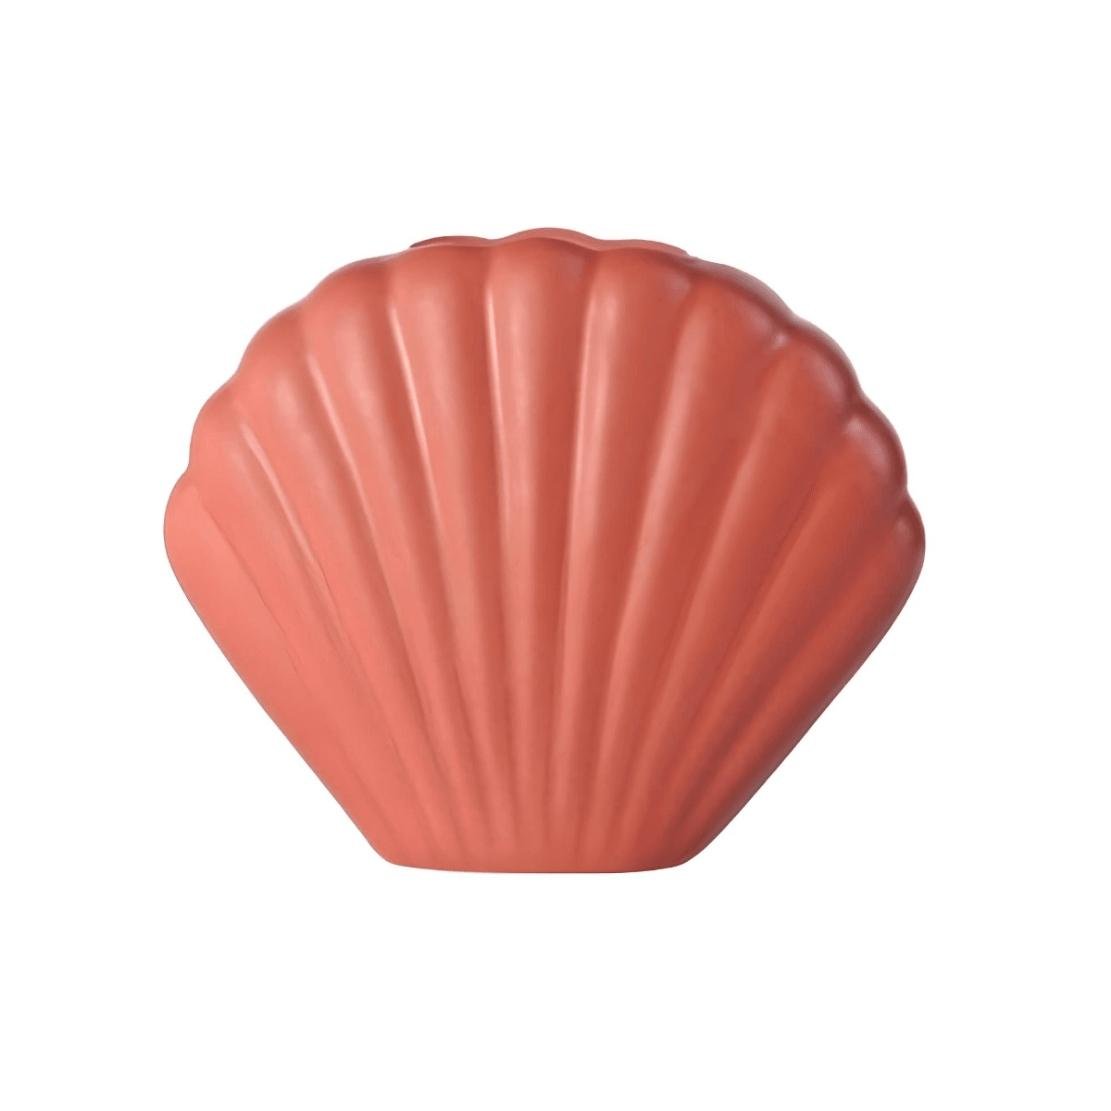 Pink ceramic shell vase